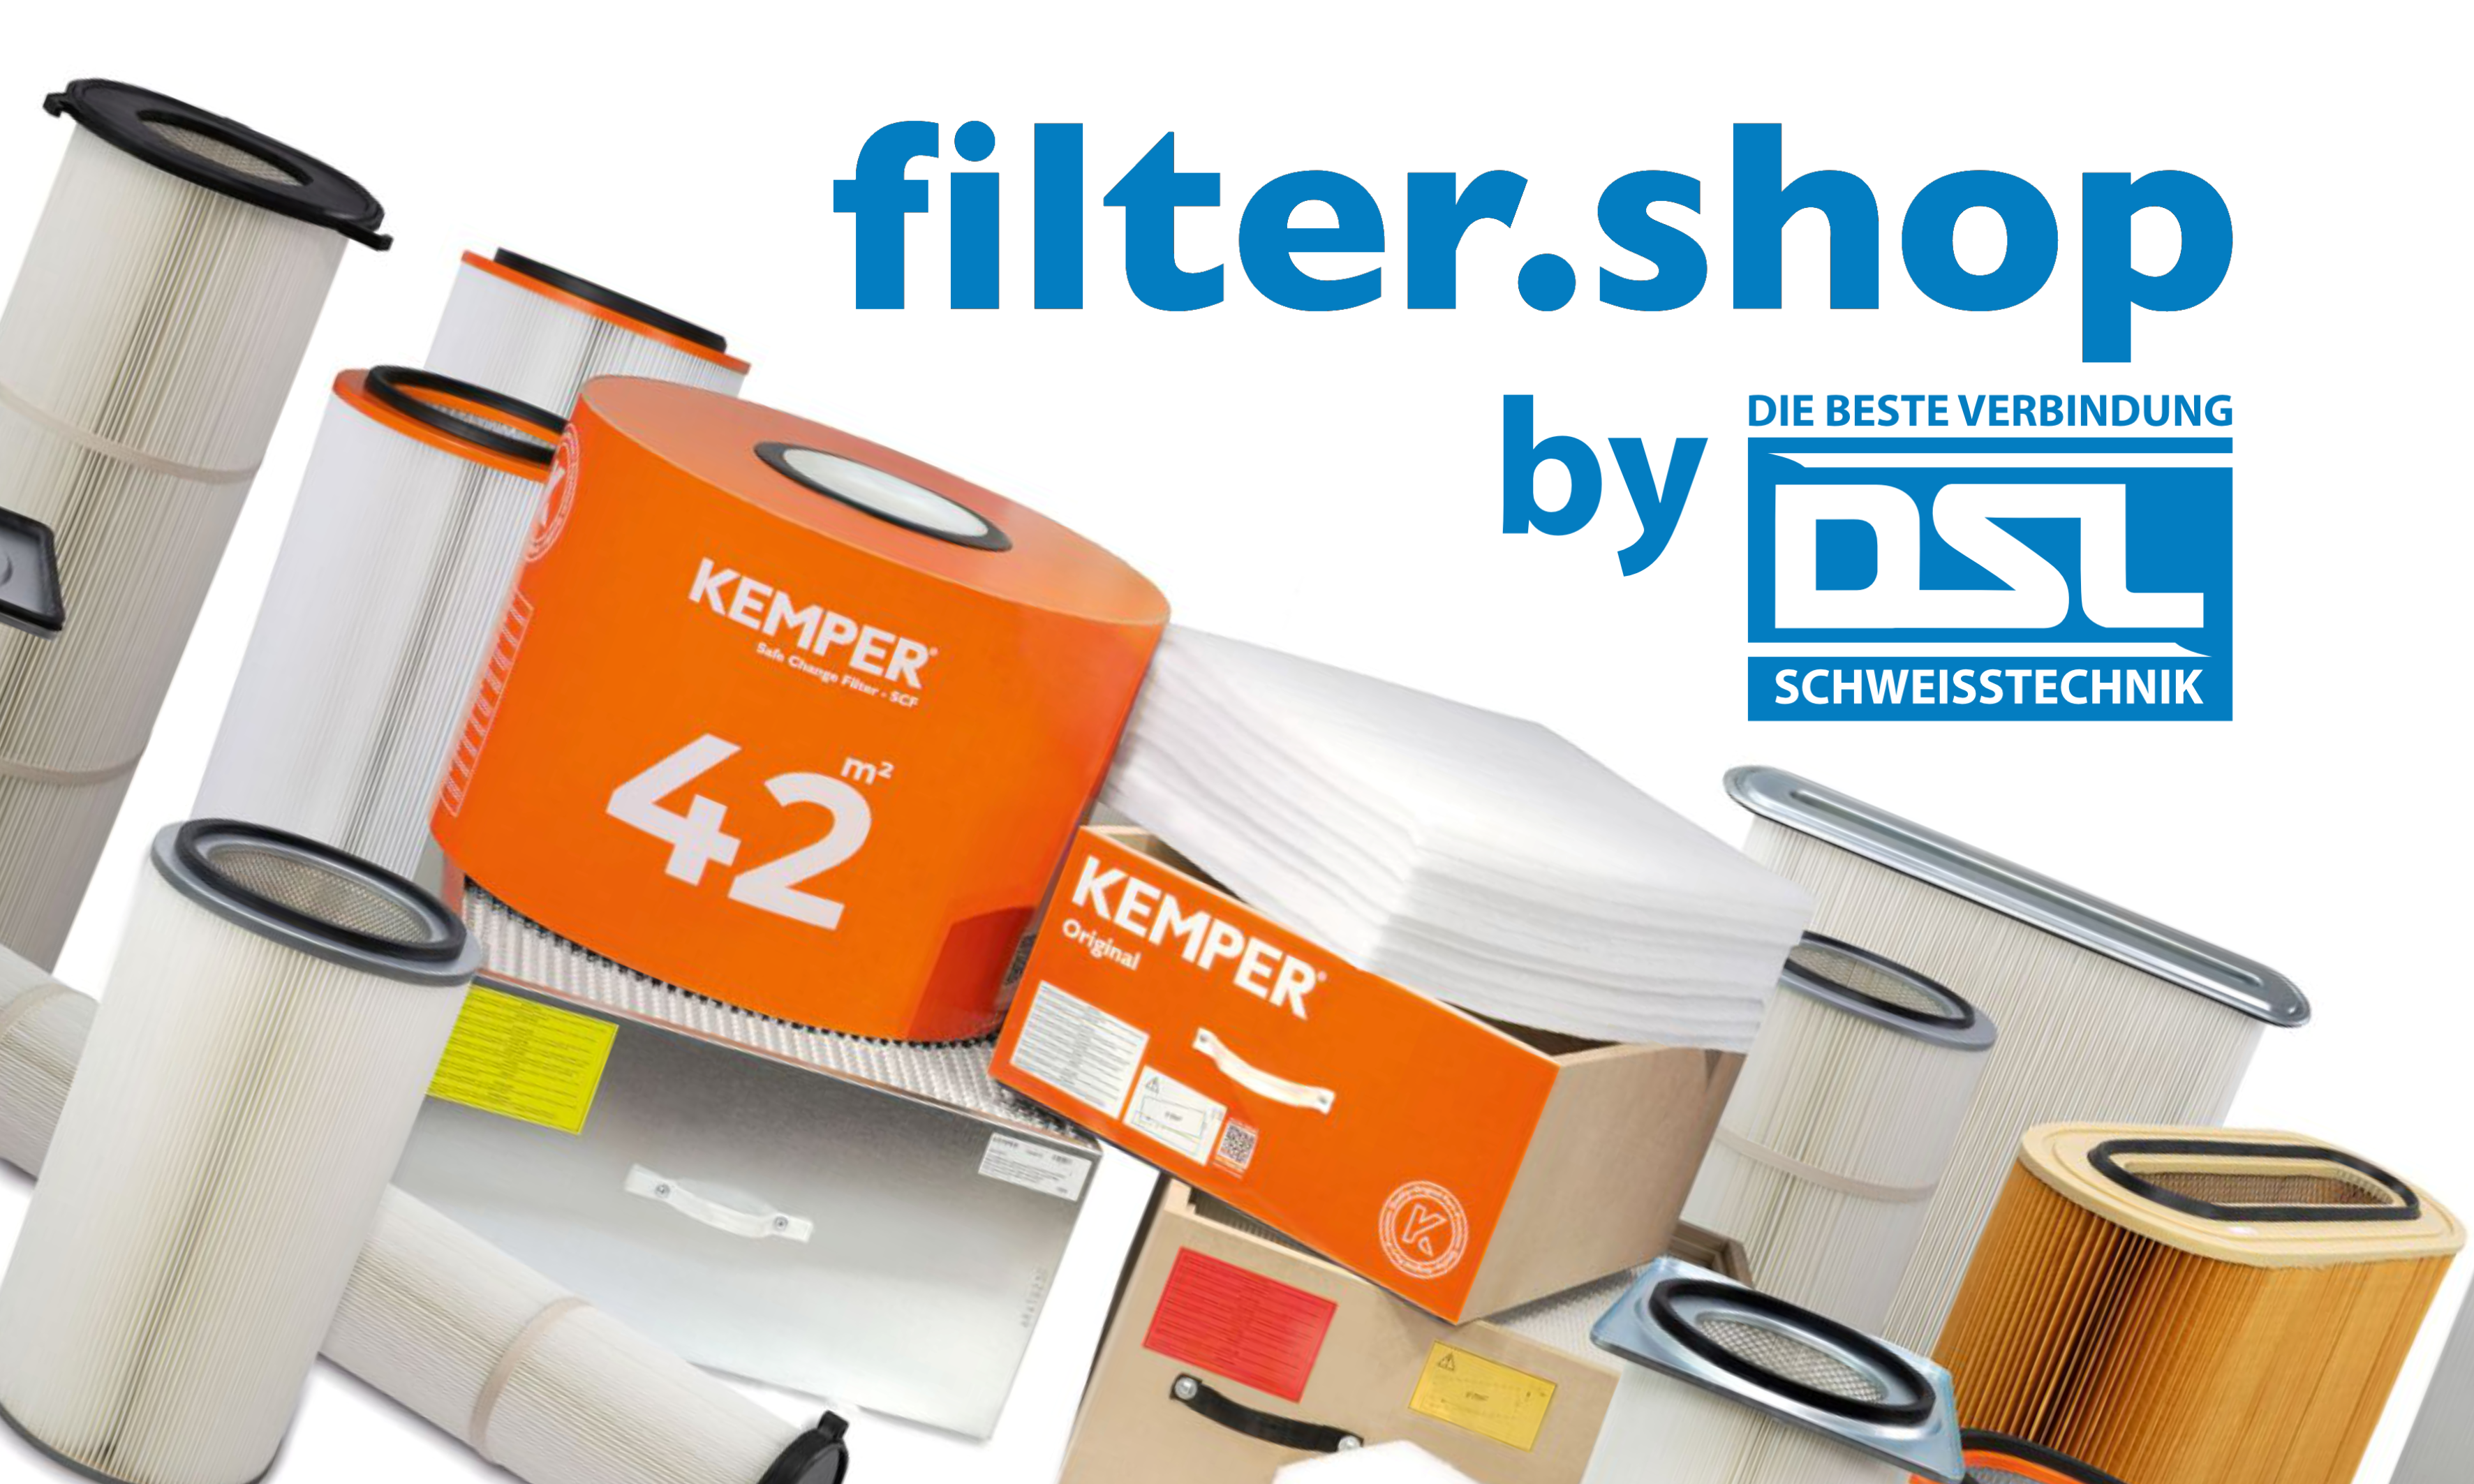 FilterShop